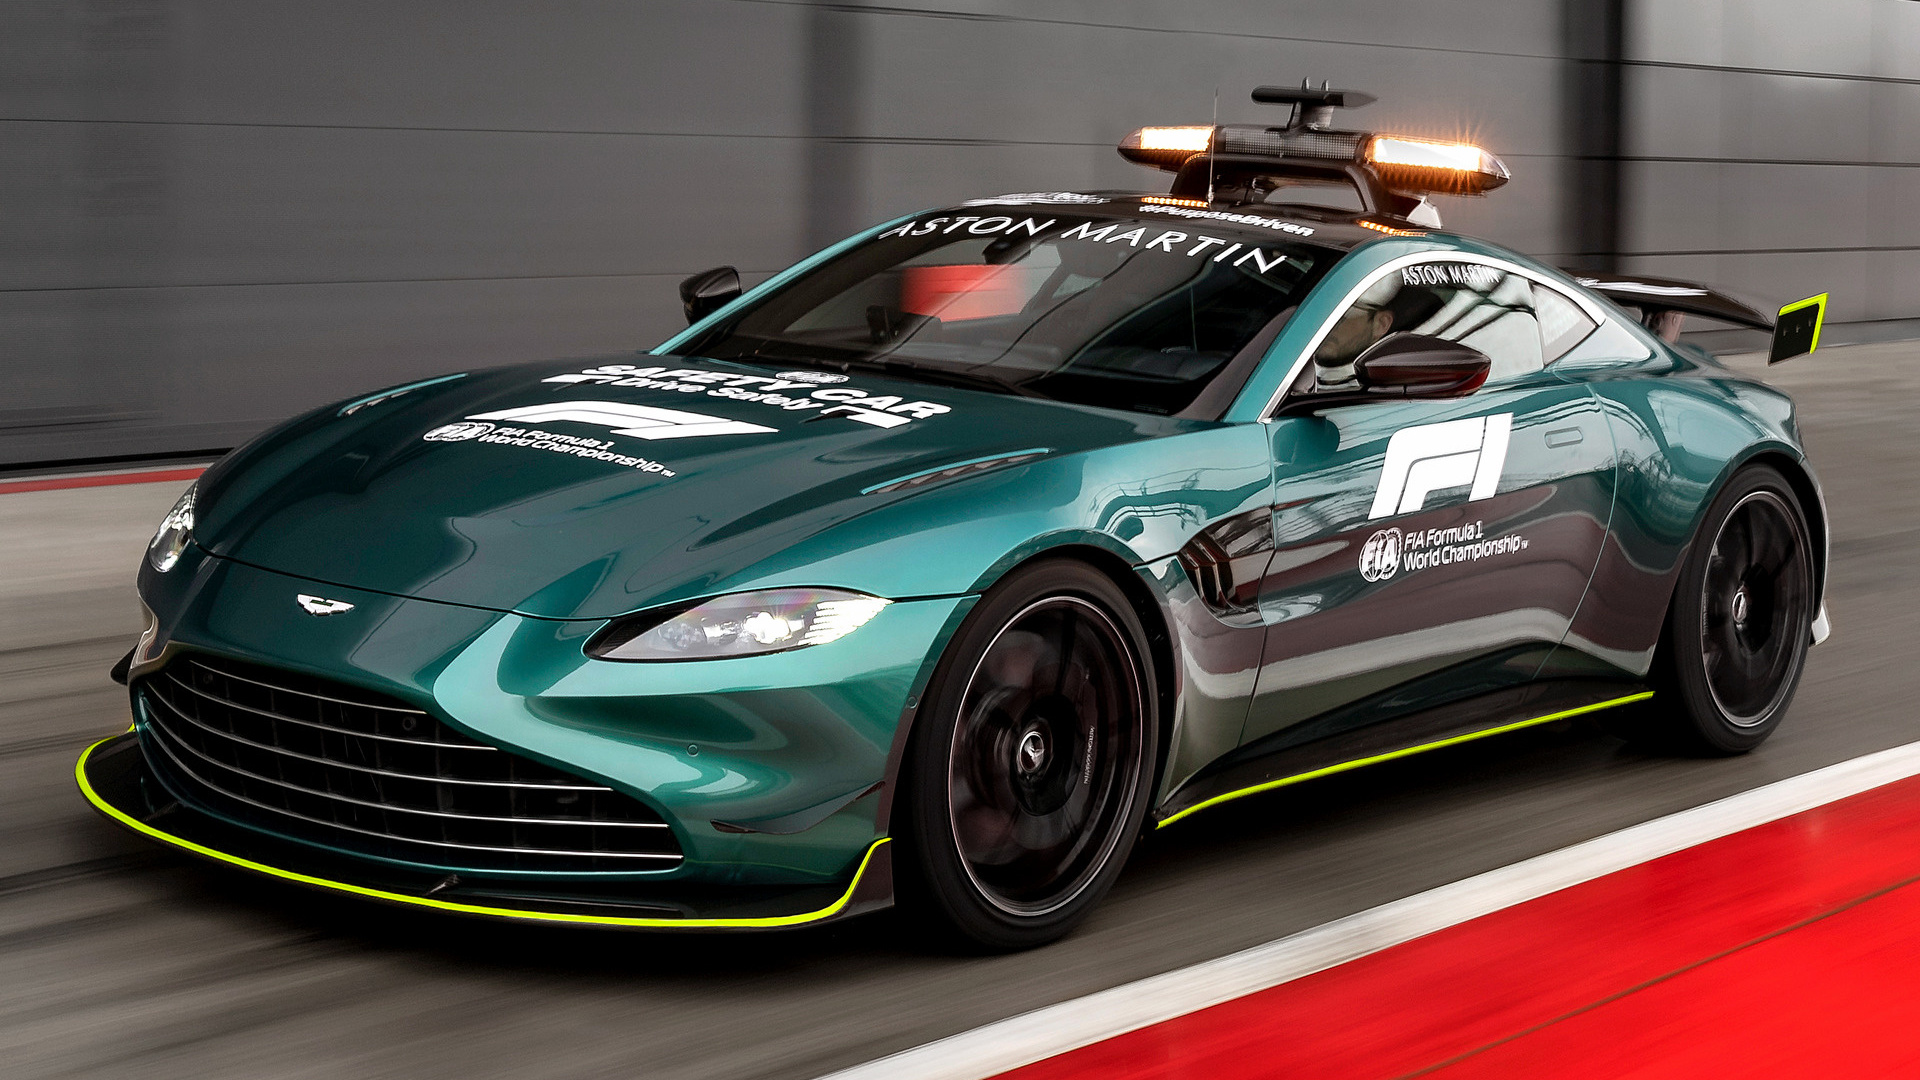 wonderful Aston Martin Vantage F1 image